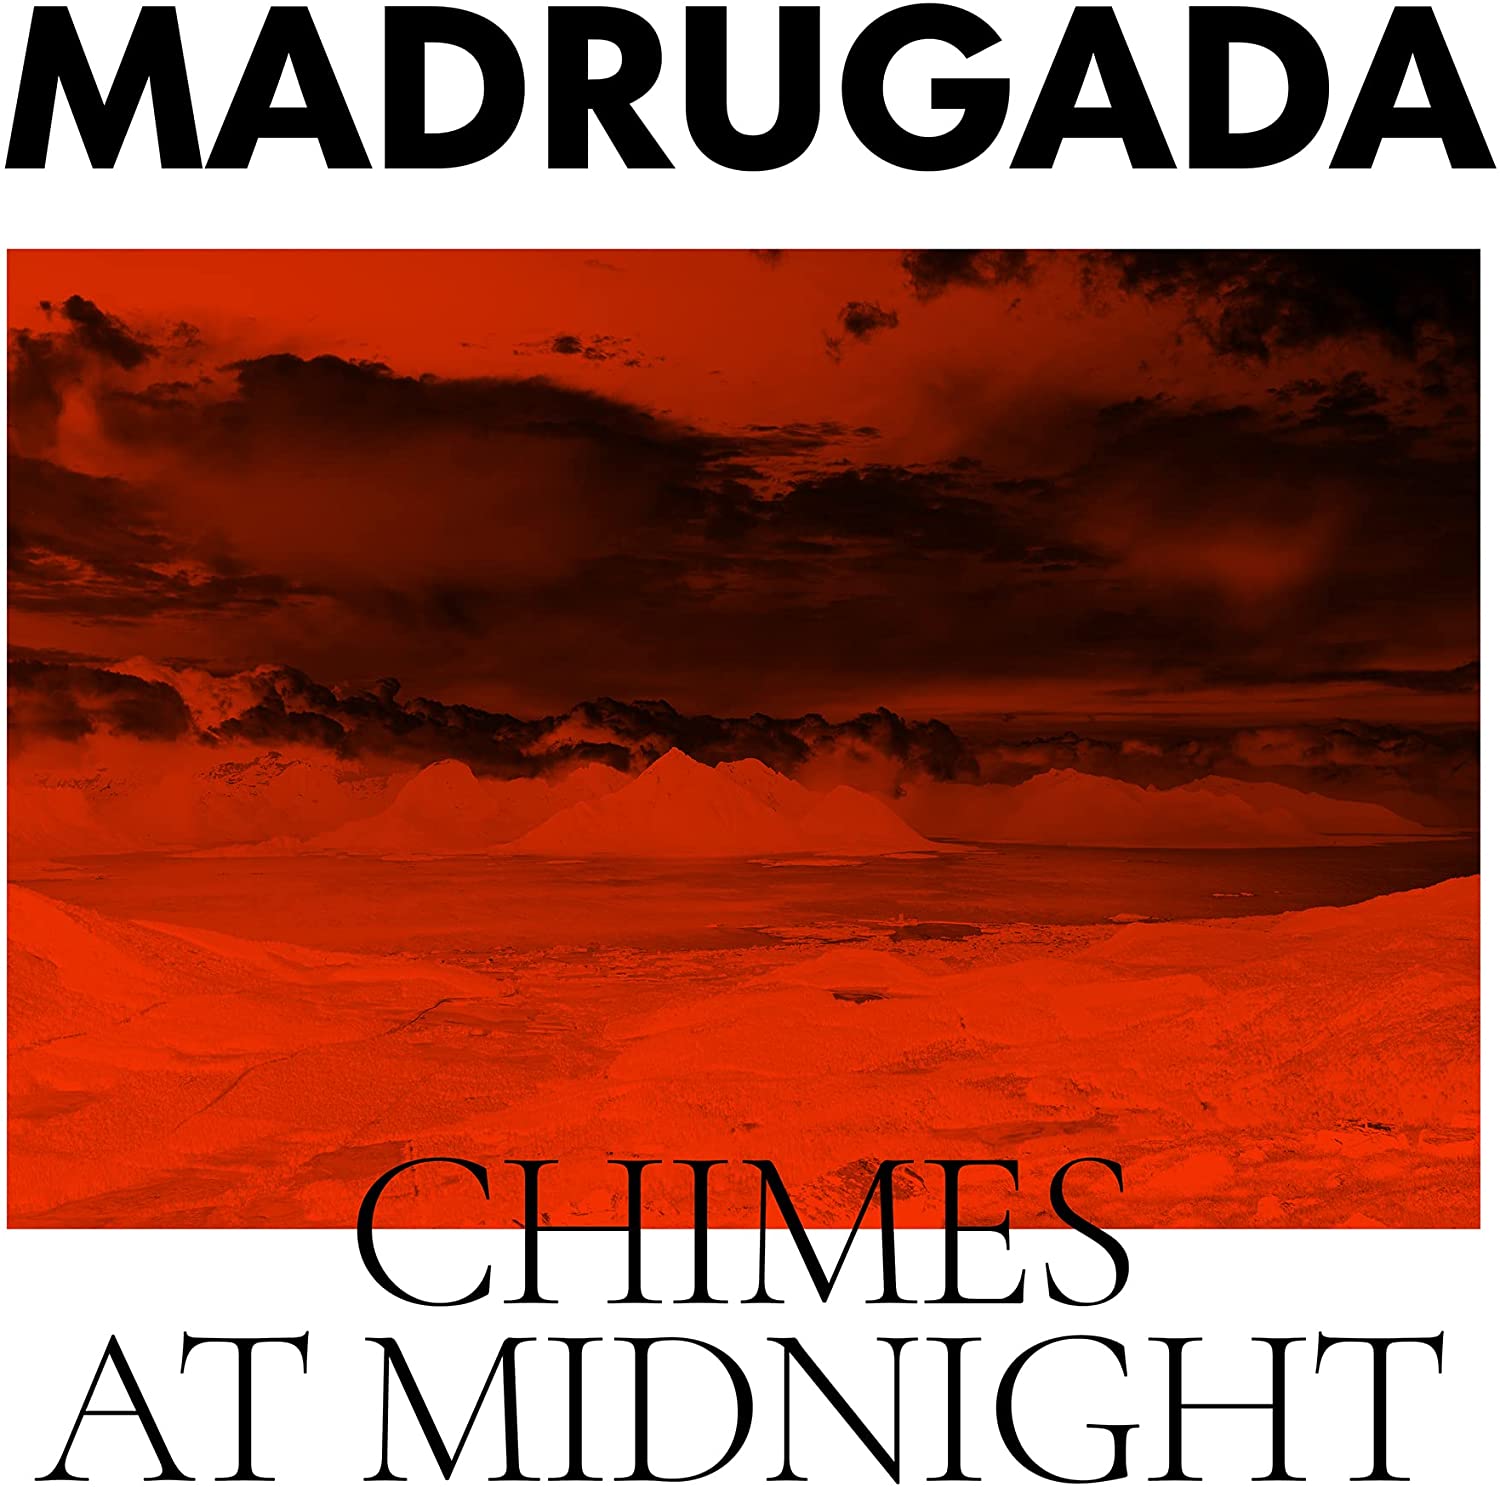 Madrugada Chimes At Midnight